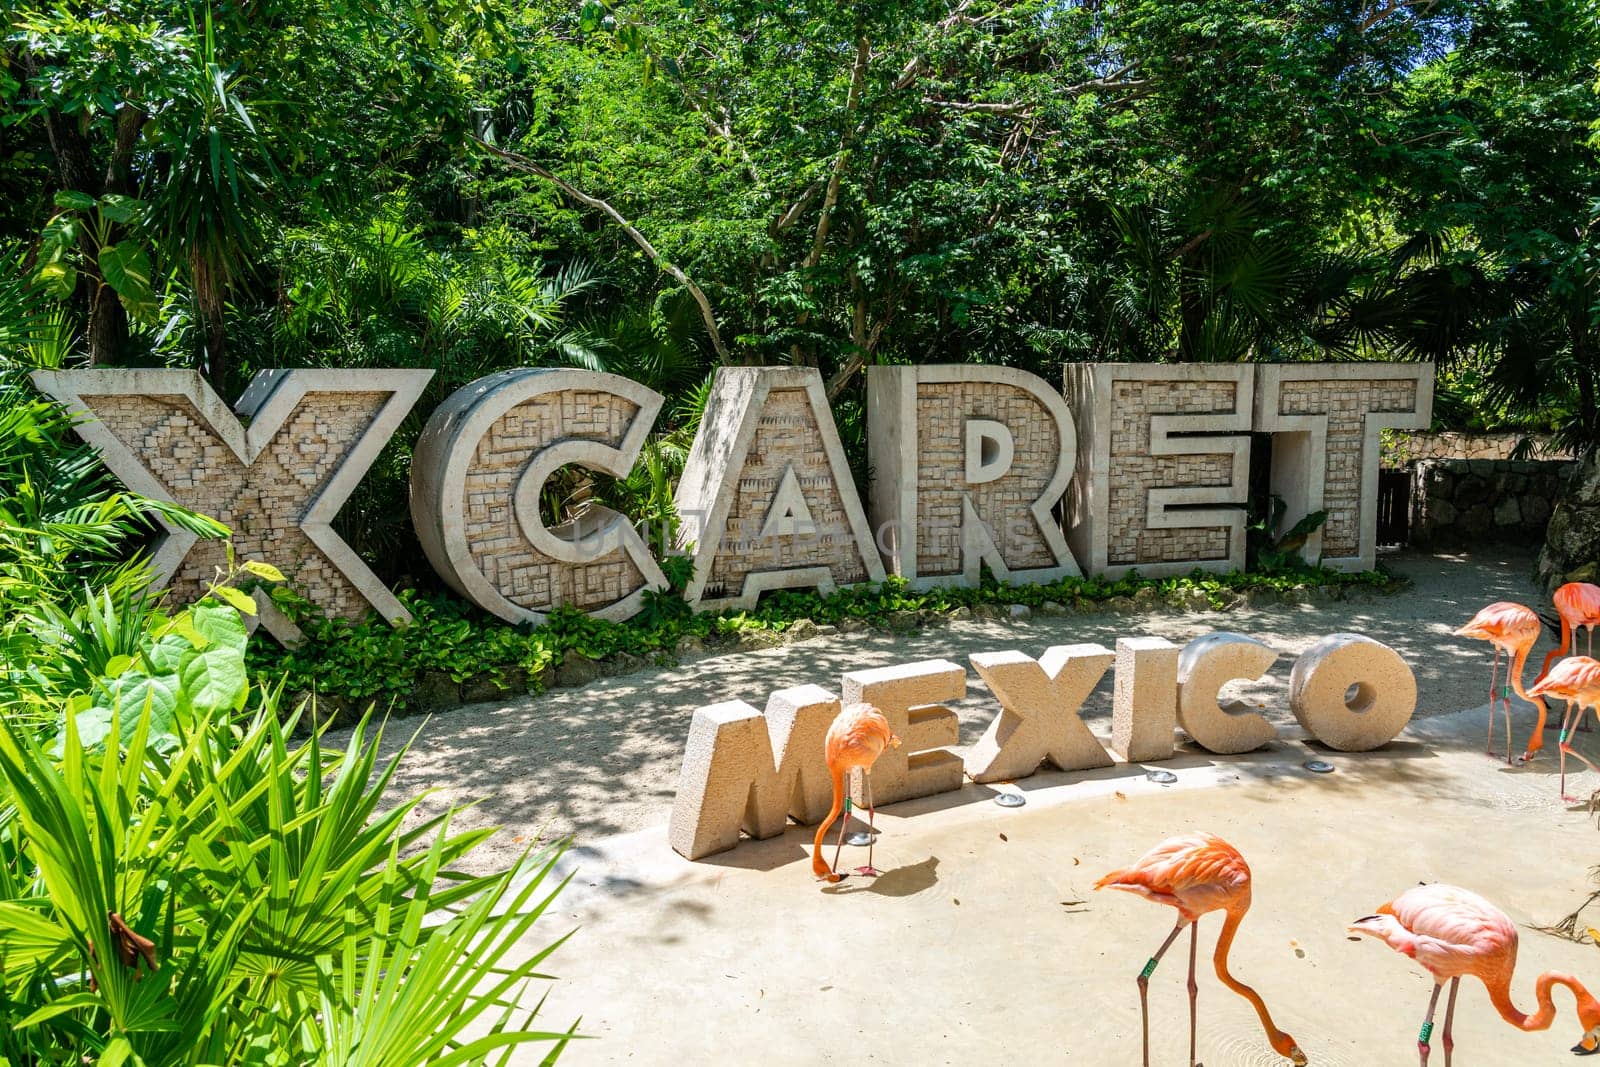 Cancun, Mexico - September 13, 2021: Xcaret theme park entrance sign in Mexico